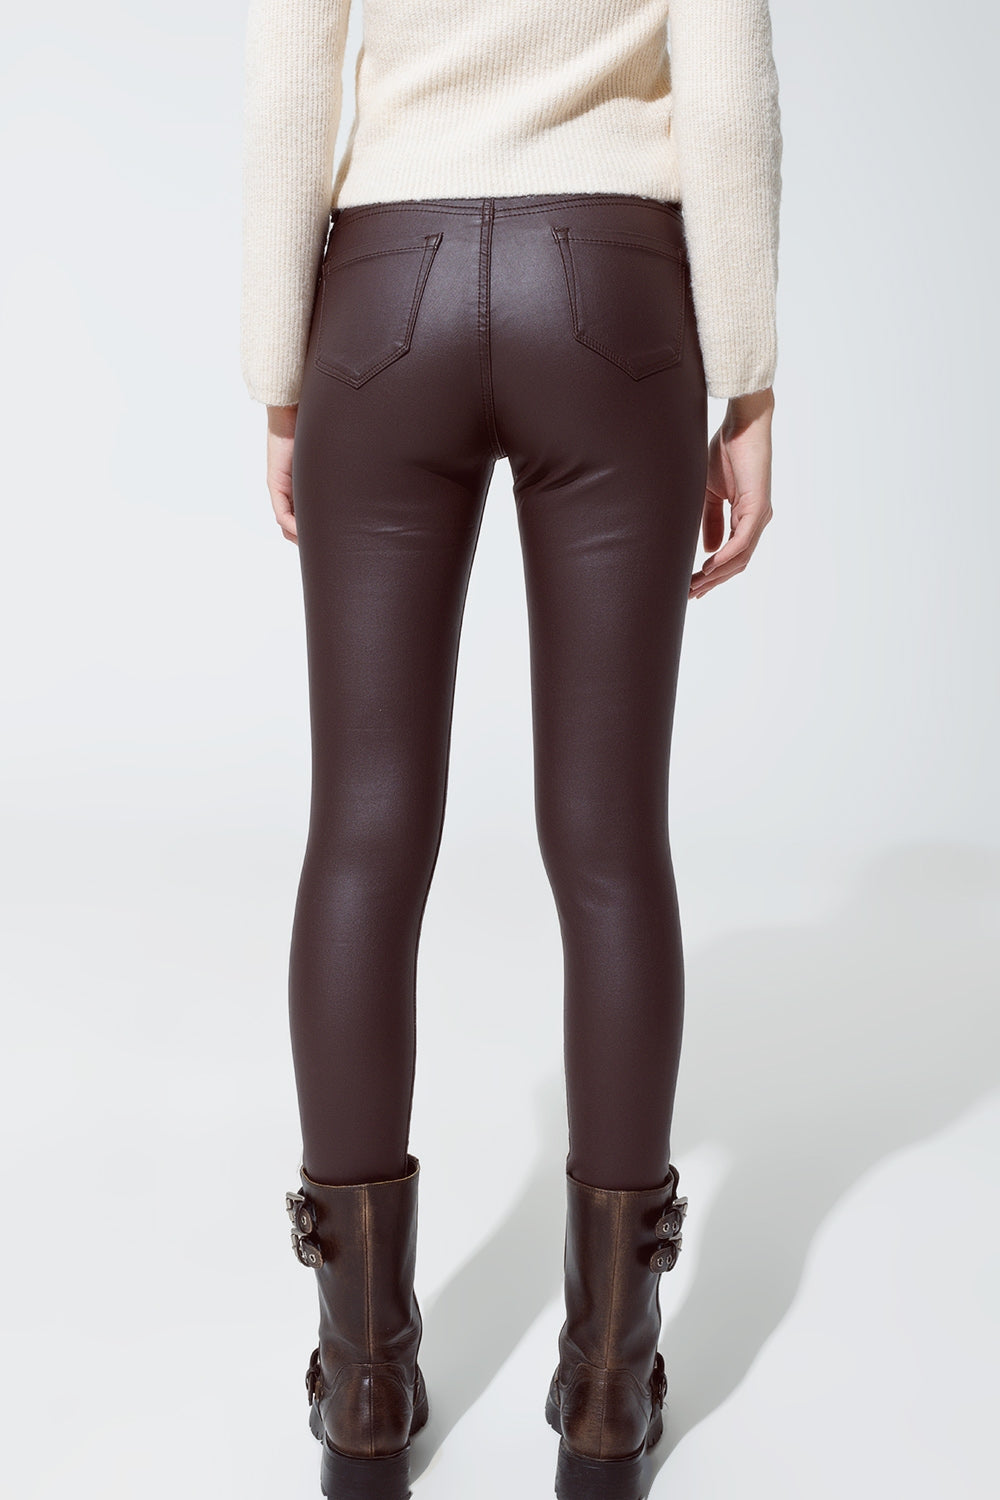 pantaloni super skinny in similpelle Marrone scuro